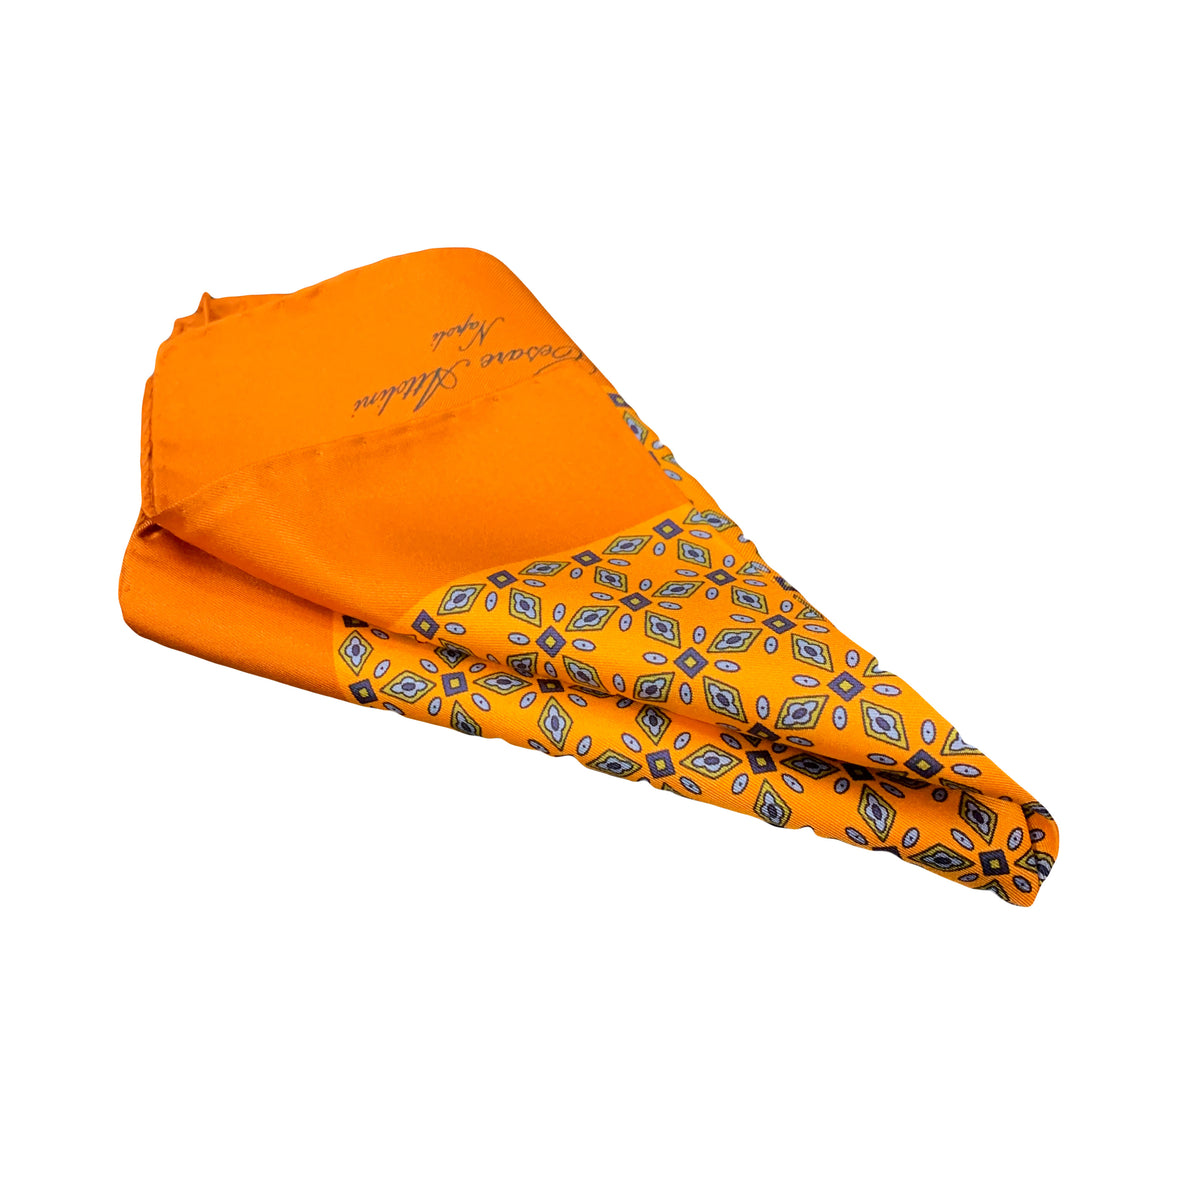 Cesare Attolini Orange Motif Silk Pocket Square Handmade In Italy